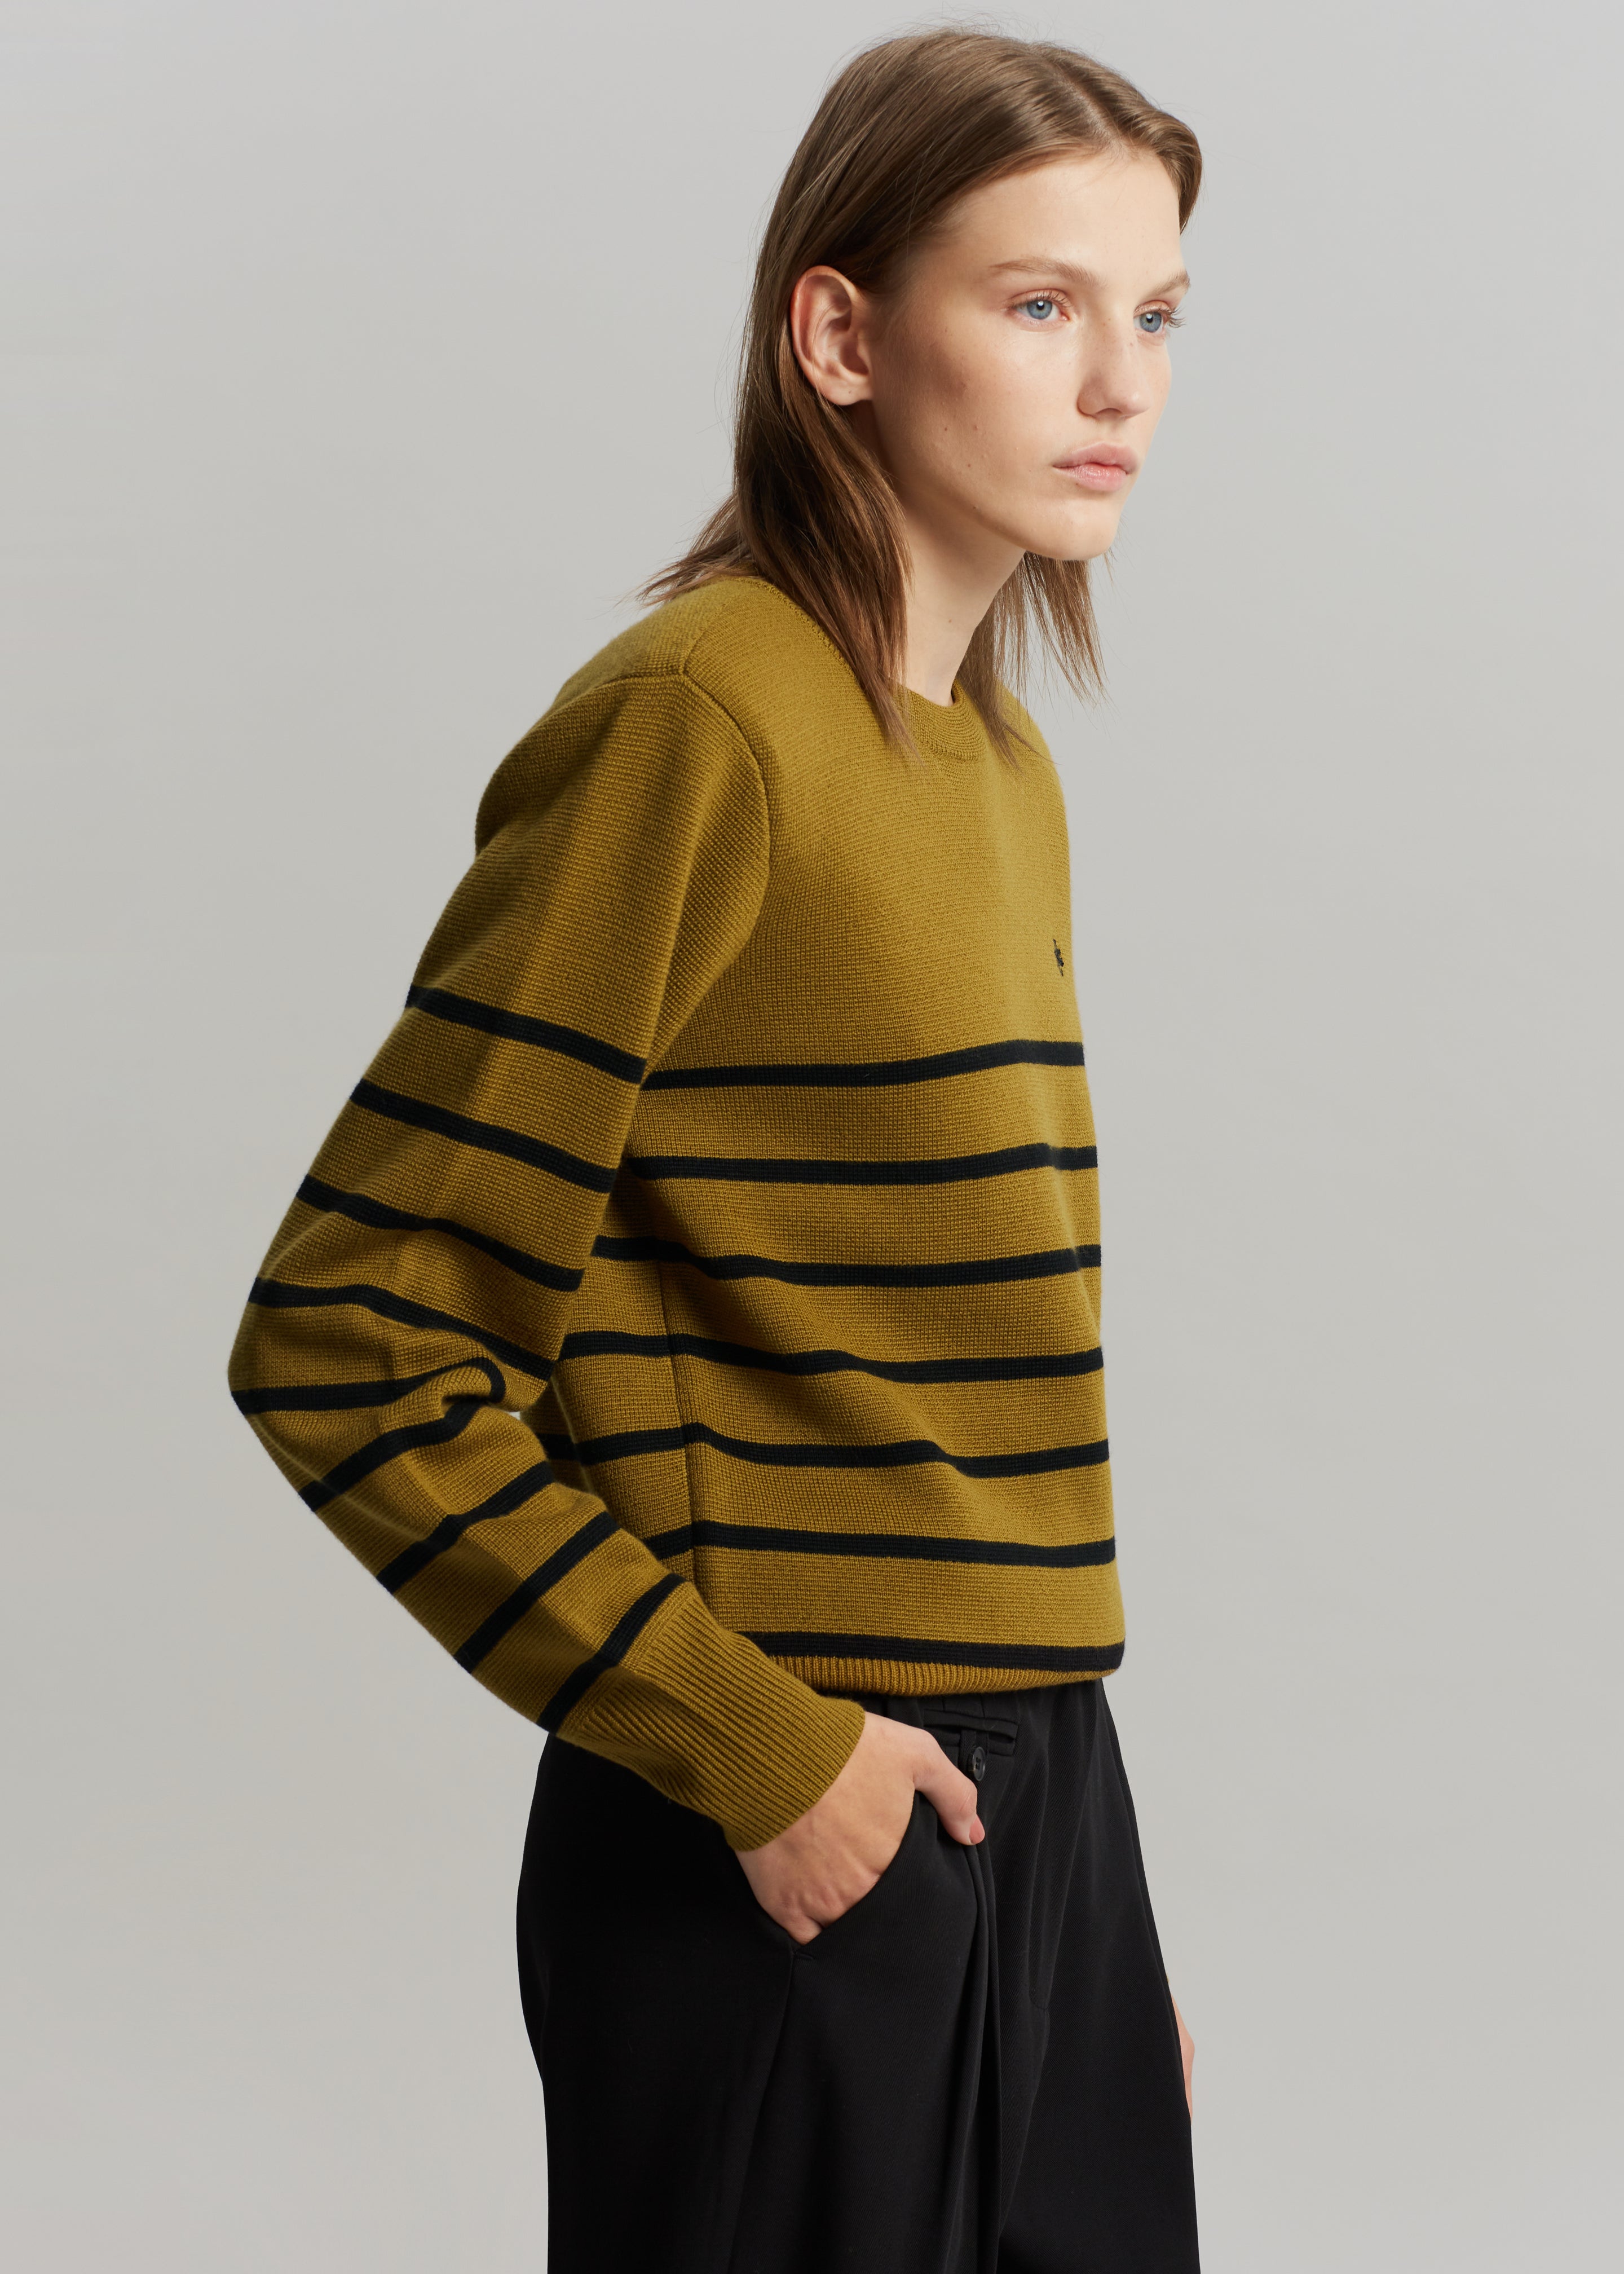 The Garment St Moritz Sweater - Mustard/Black Stripes - 1